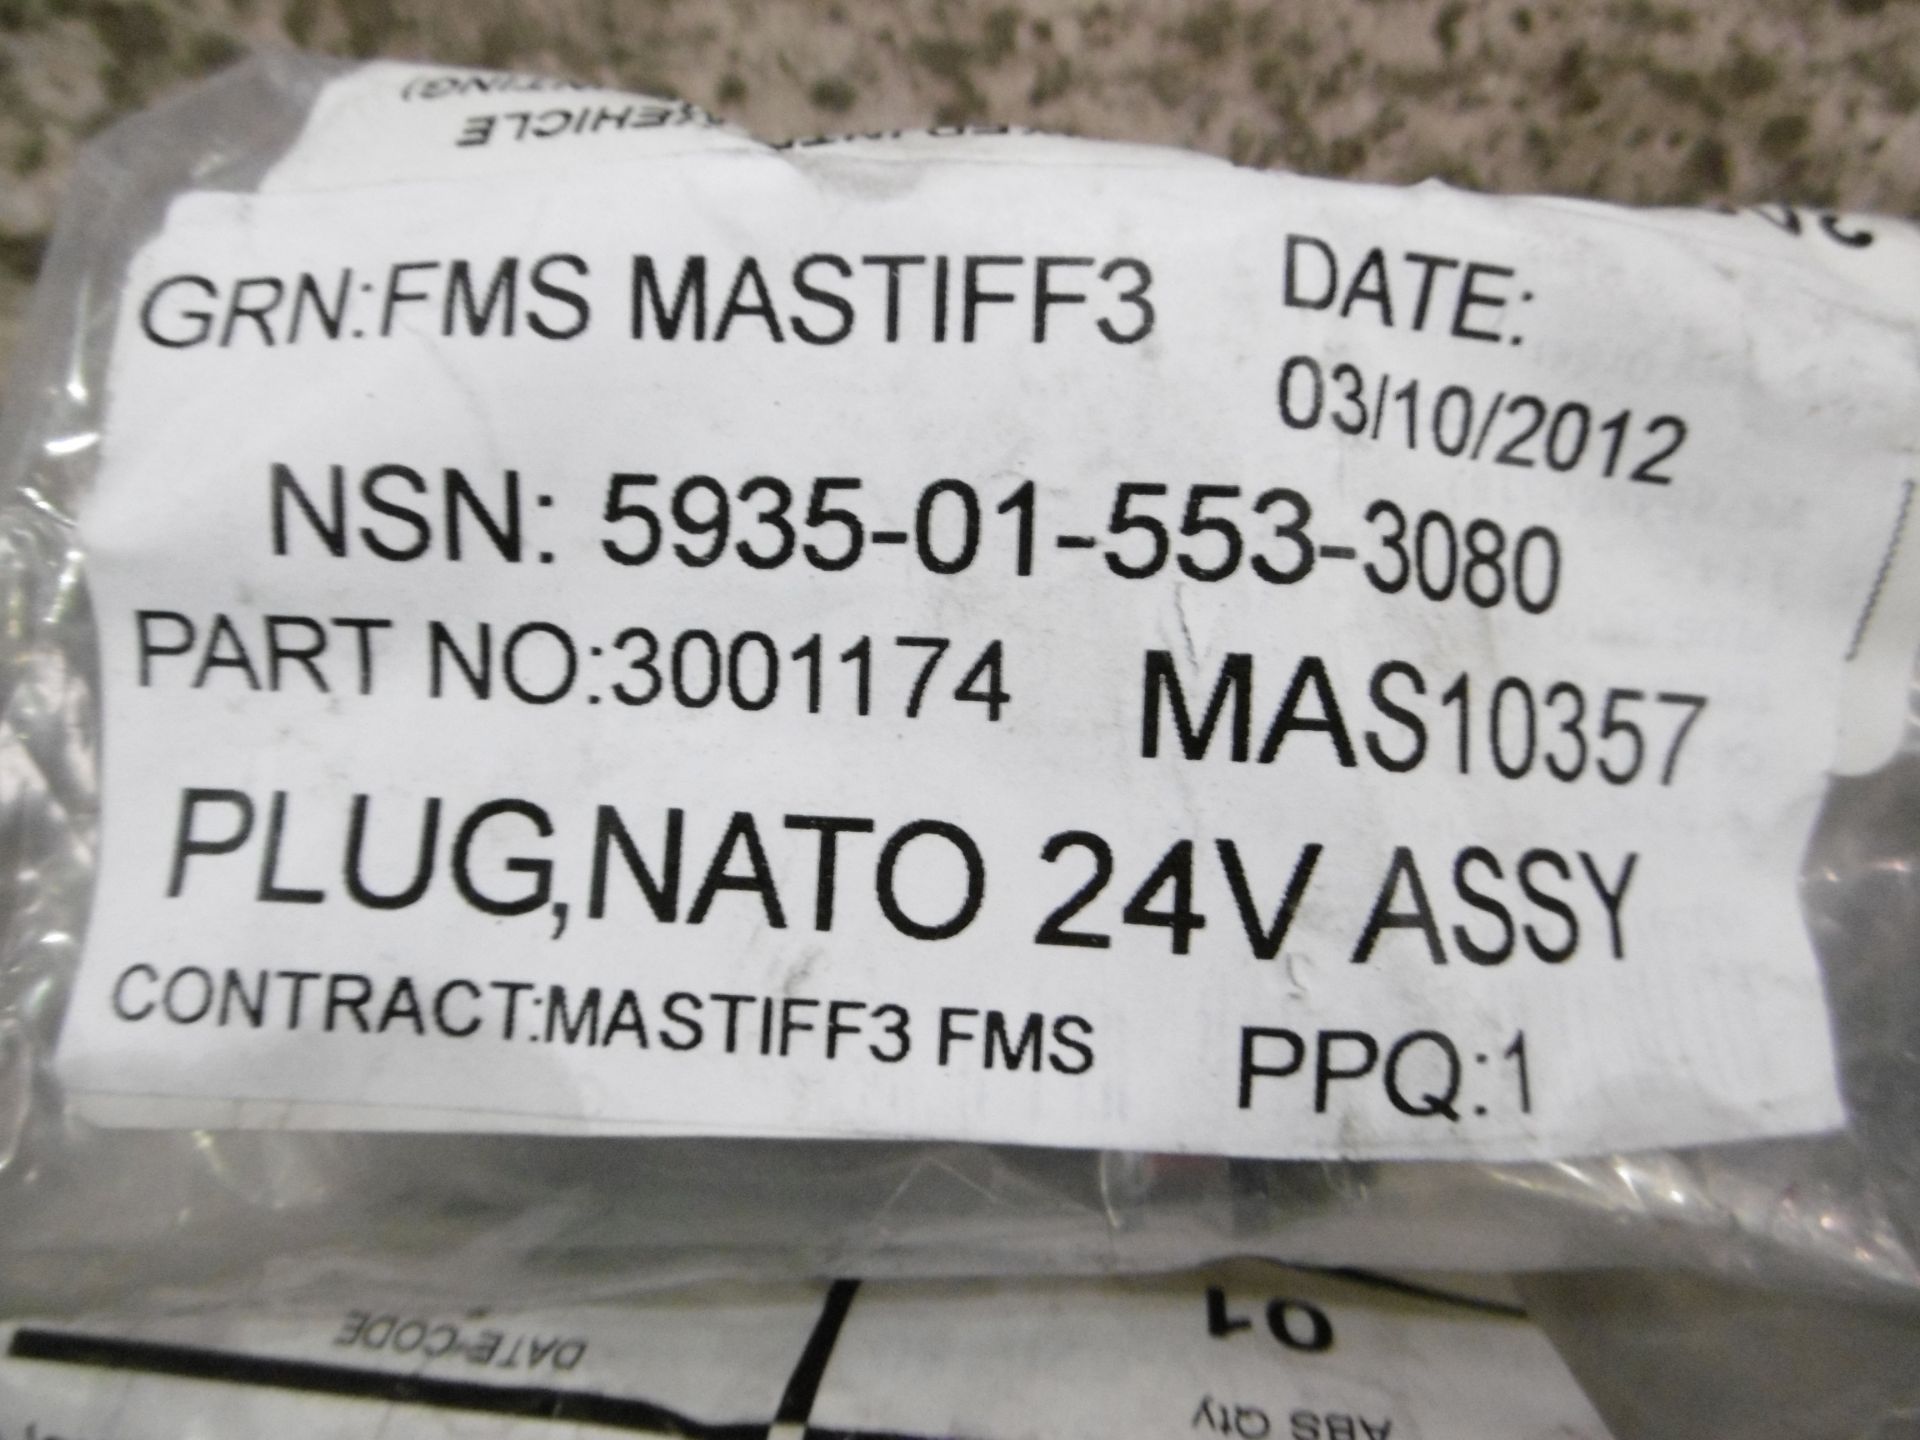 3 x NATO 24v Plug Assys - Image 5 of 5